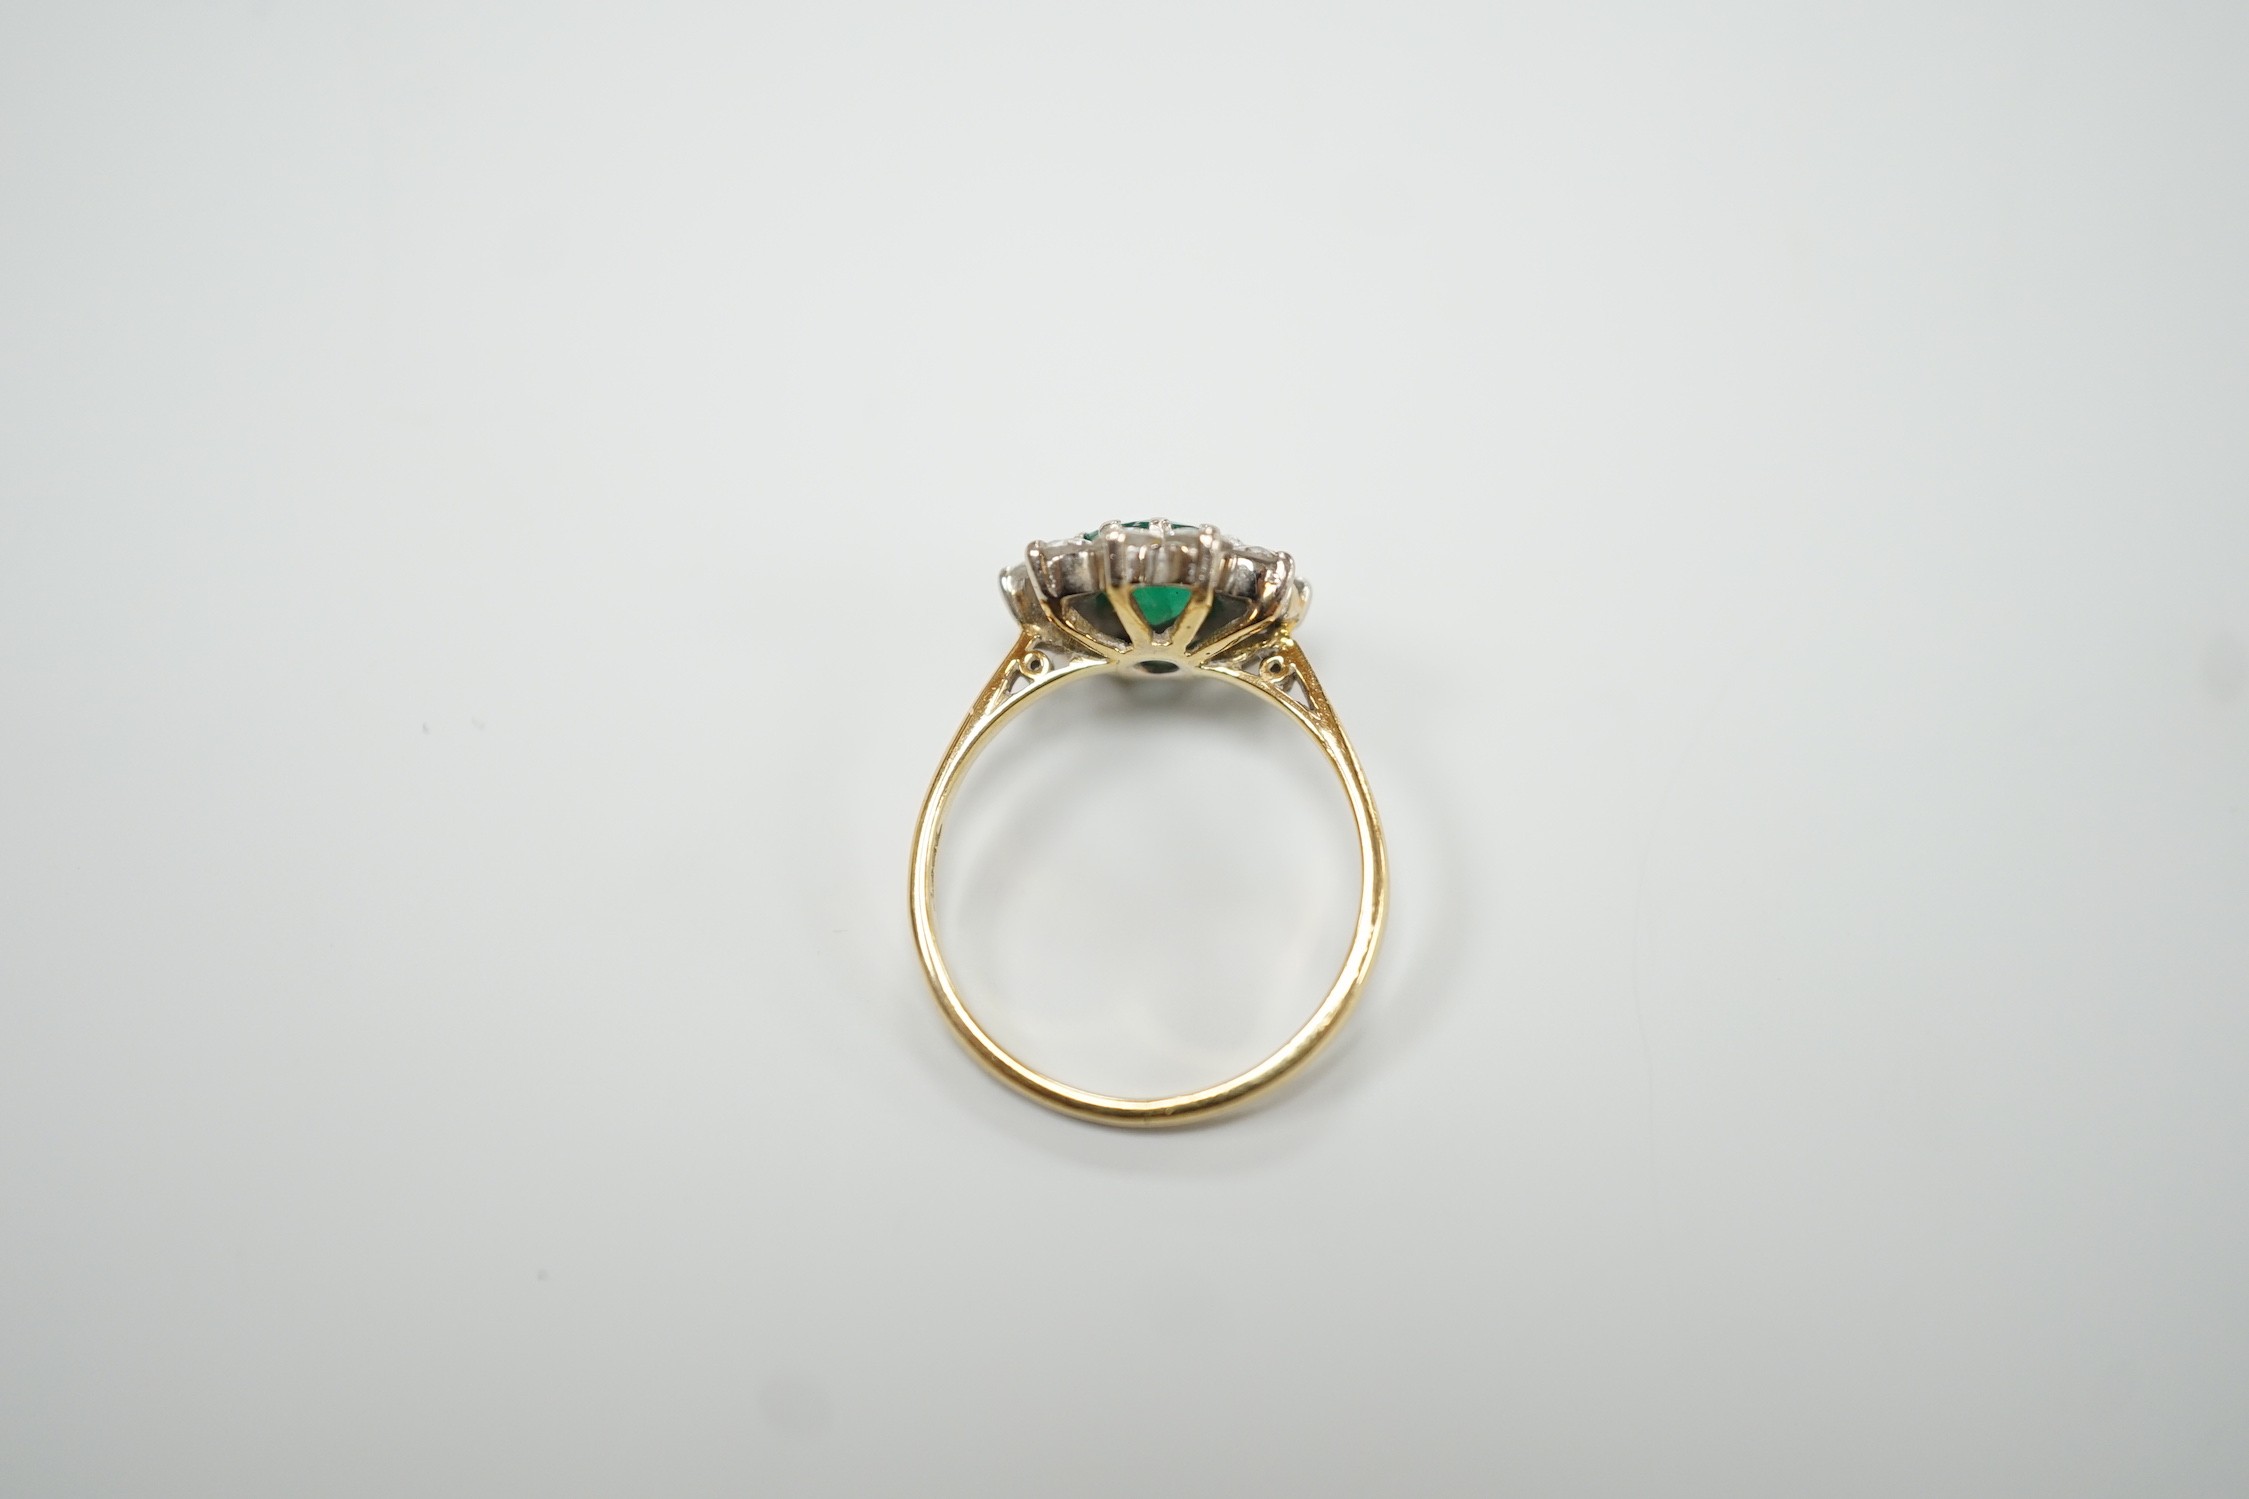 An 18ct, emerald and diamond set circular cluster ring, size K, gross weight 3 grams.